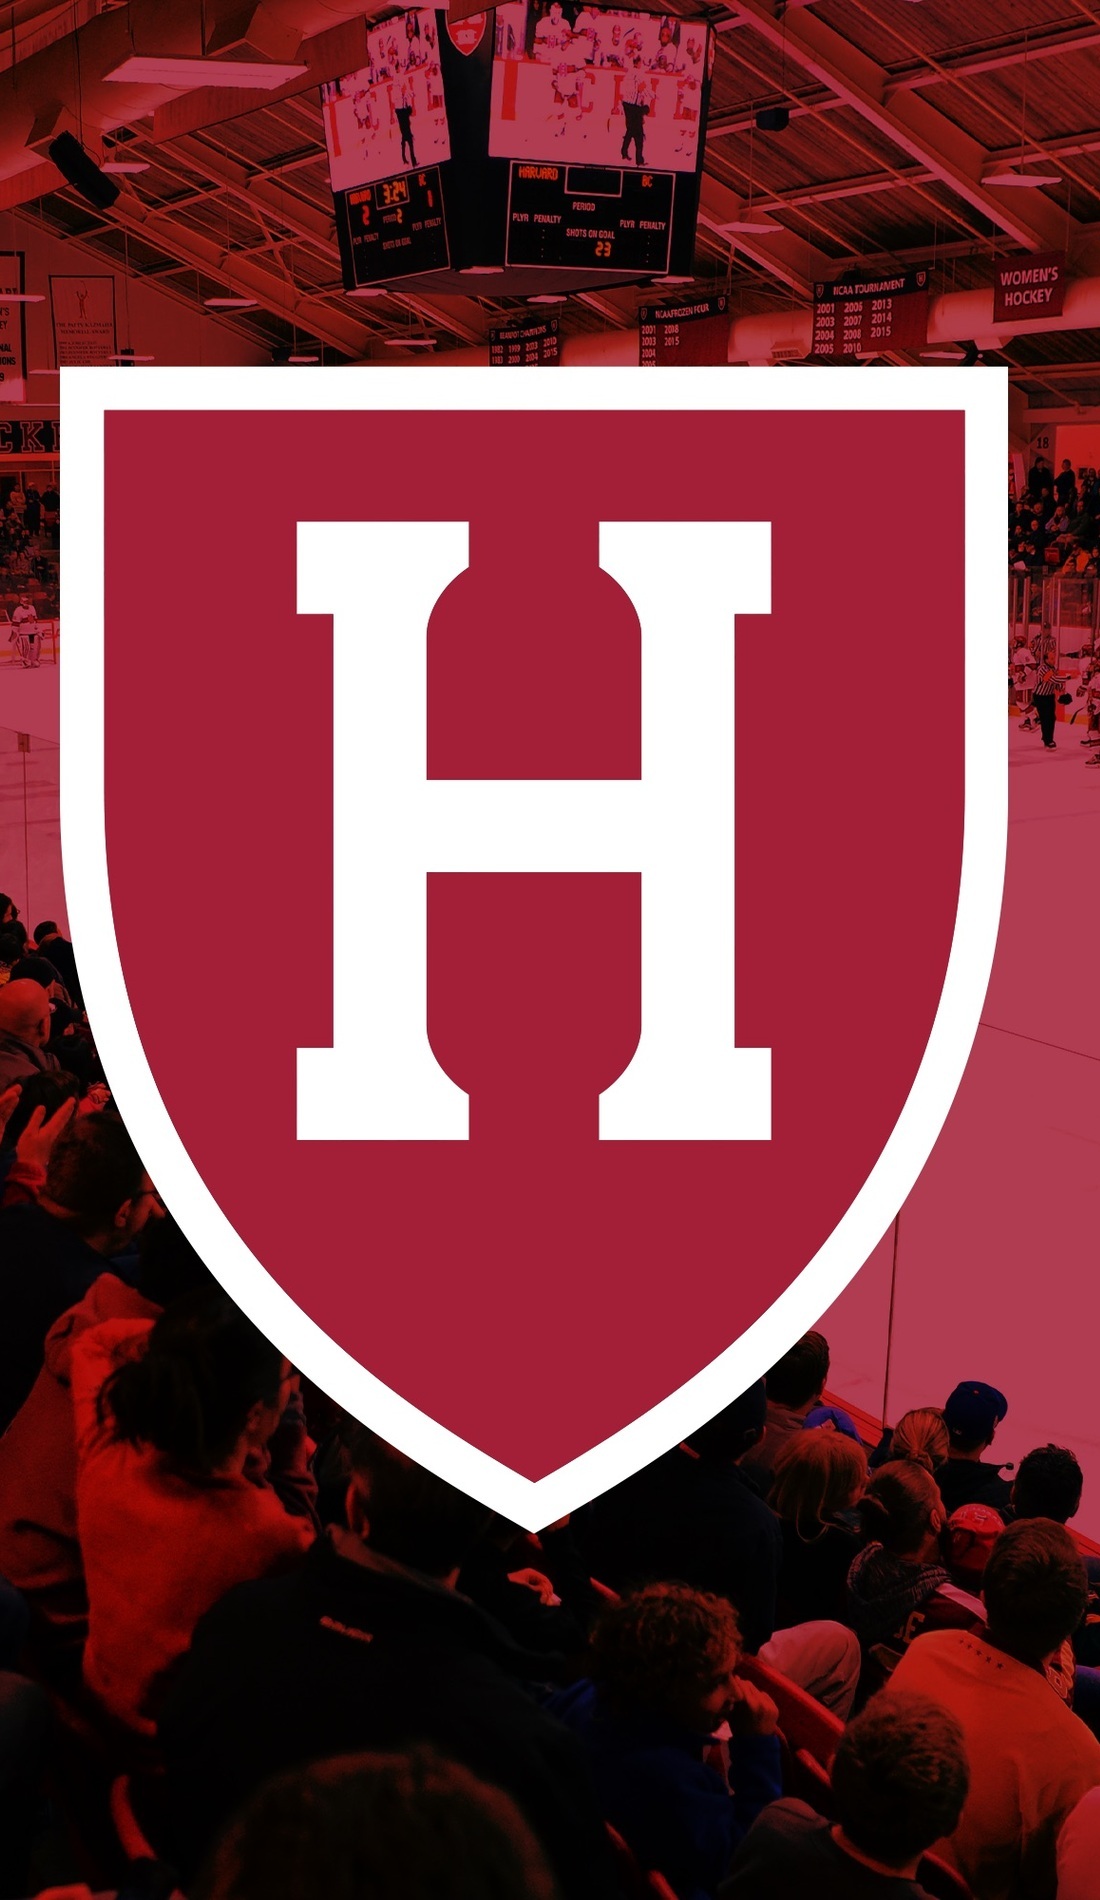 A Harvard Crimson Hockey live event